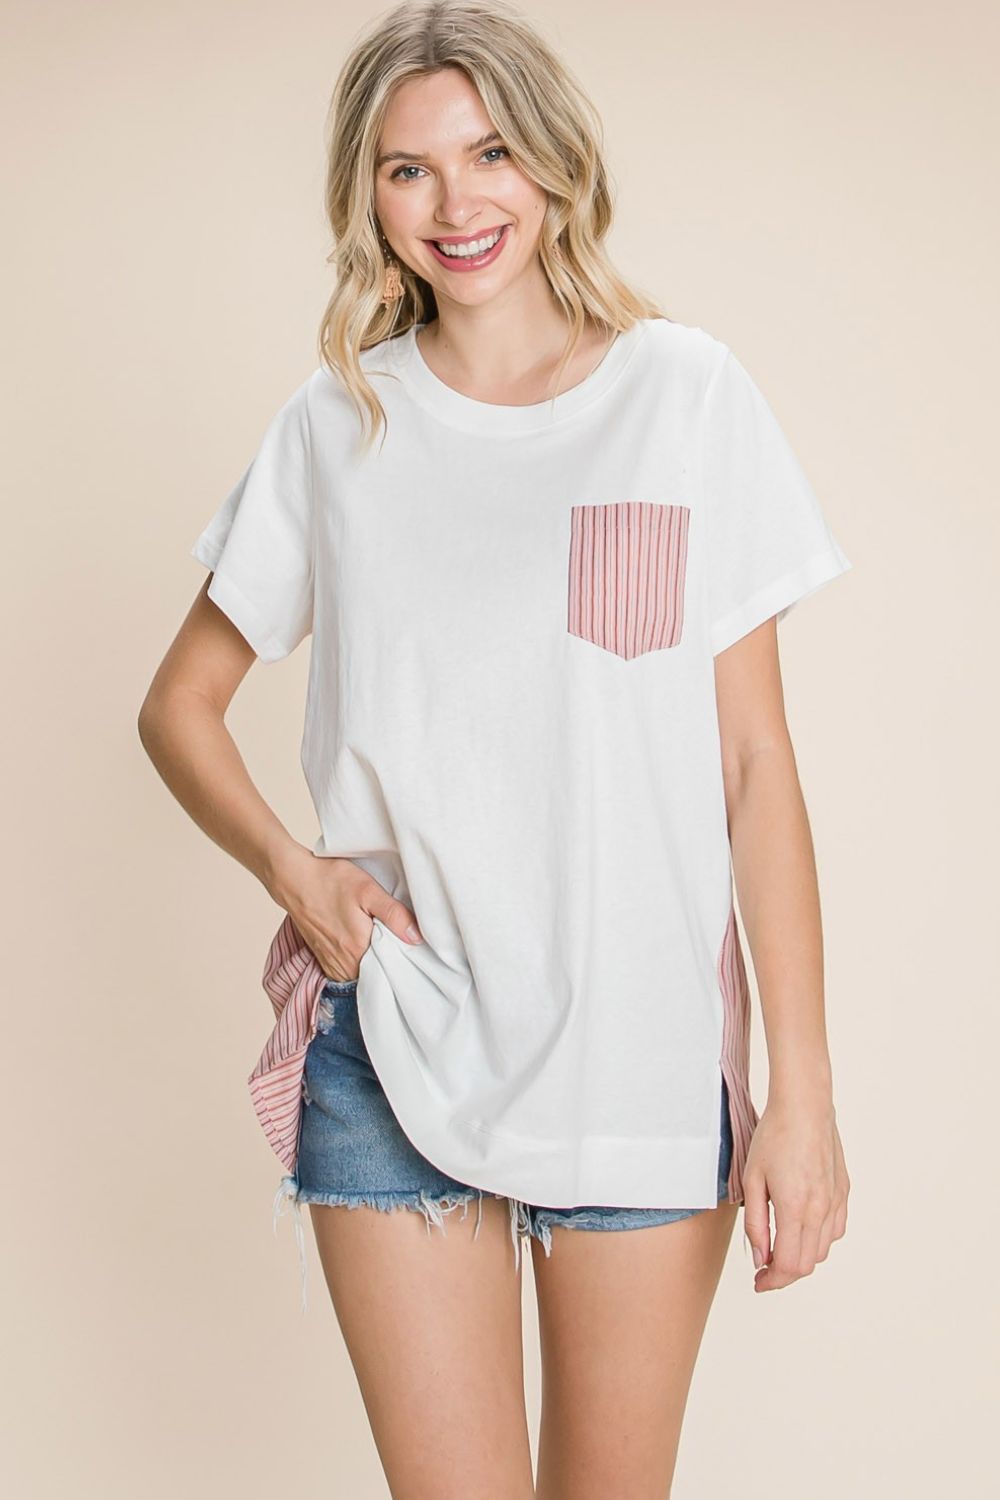 Cotton Bleu by Nu Label Contrast Striped Short Sleeve T-Shirt Trendsi